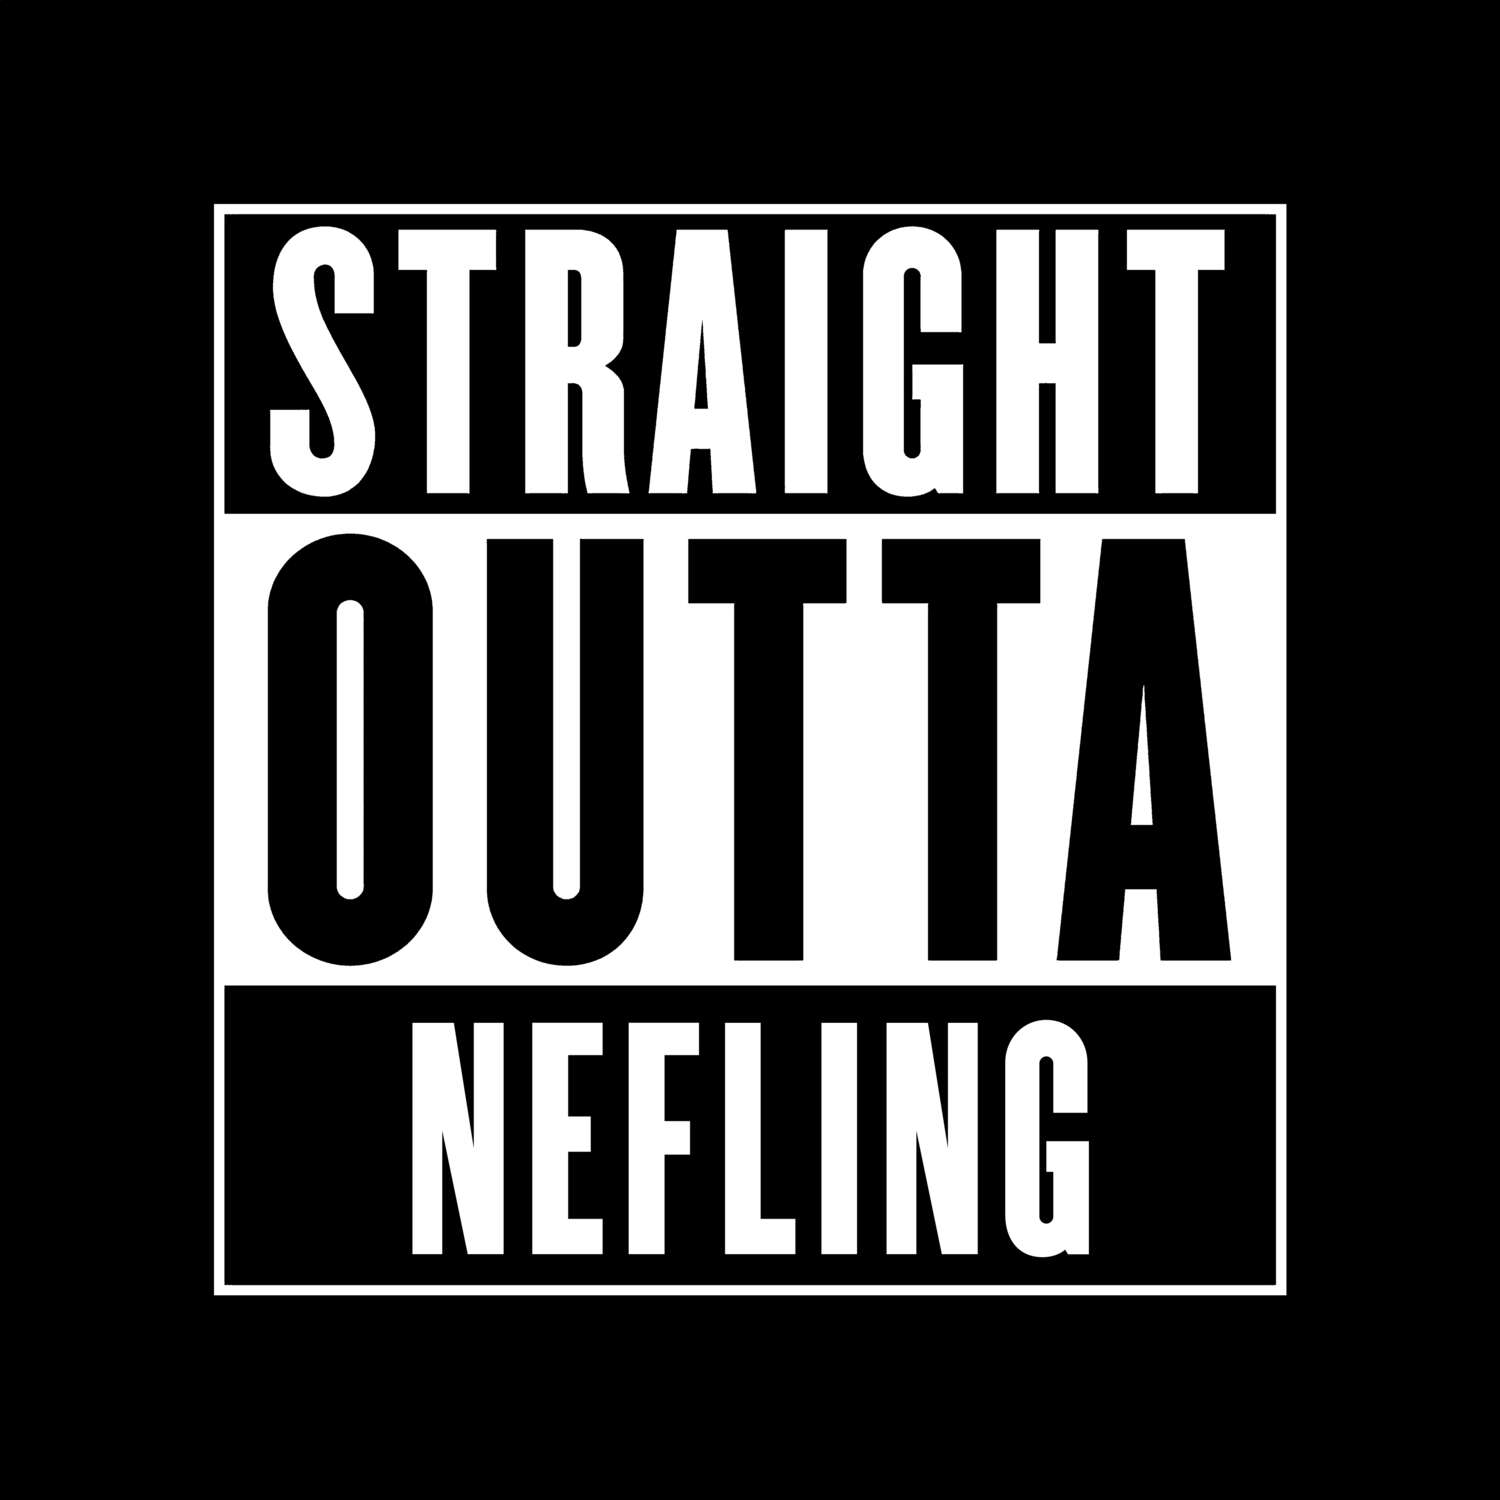 Nefling T-Shirt »Straight Outta«